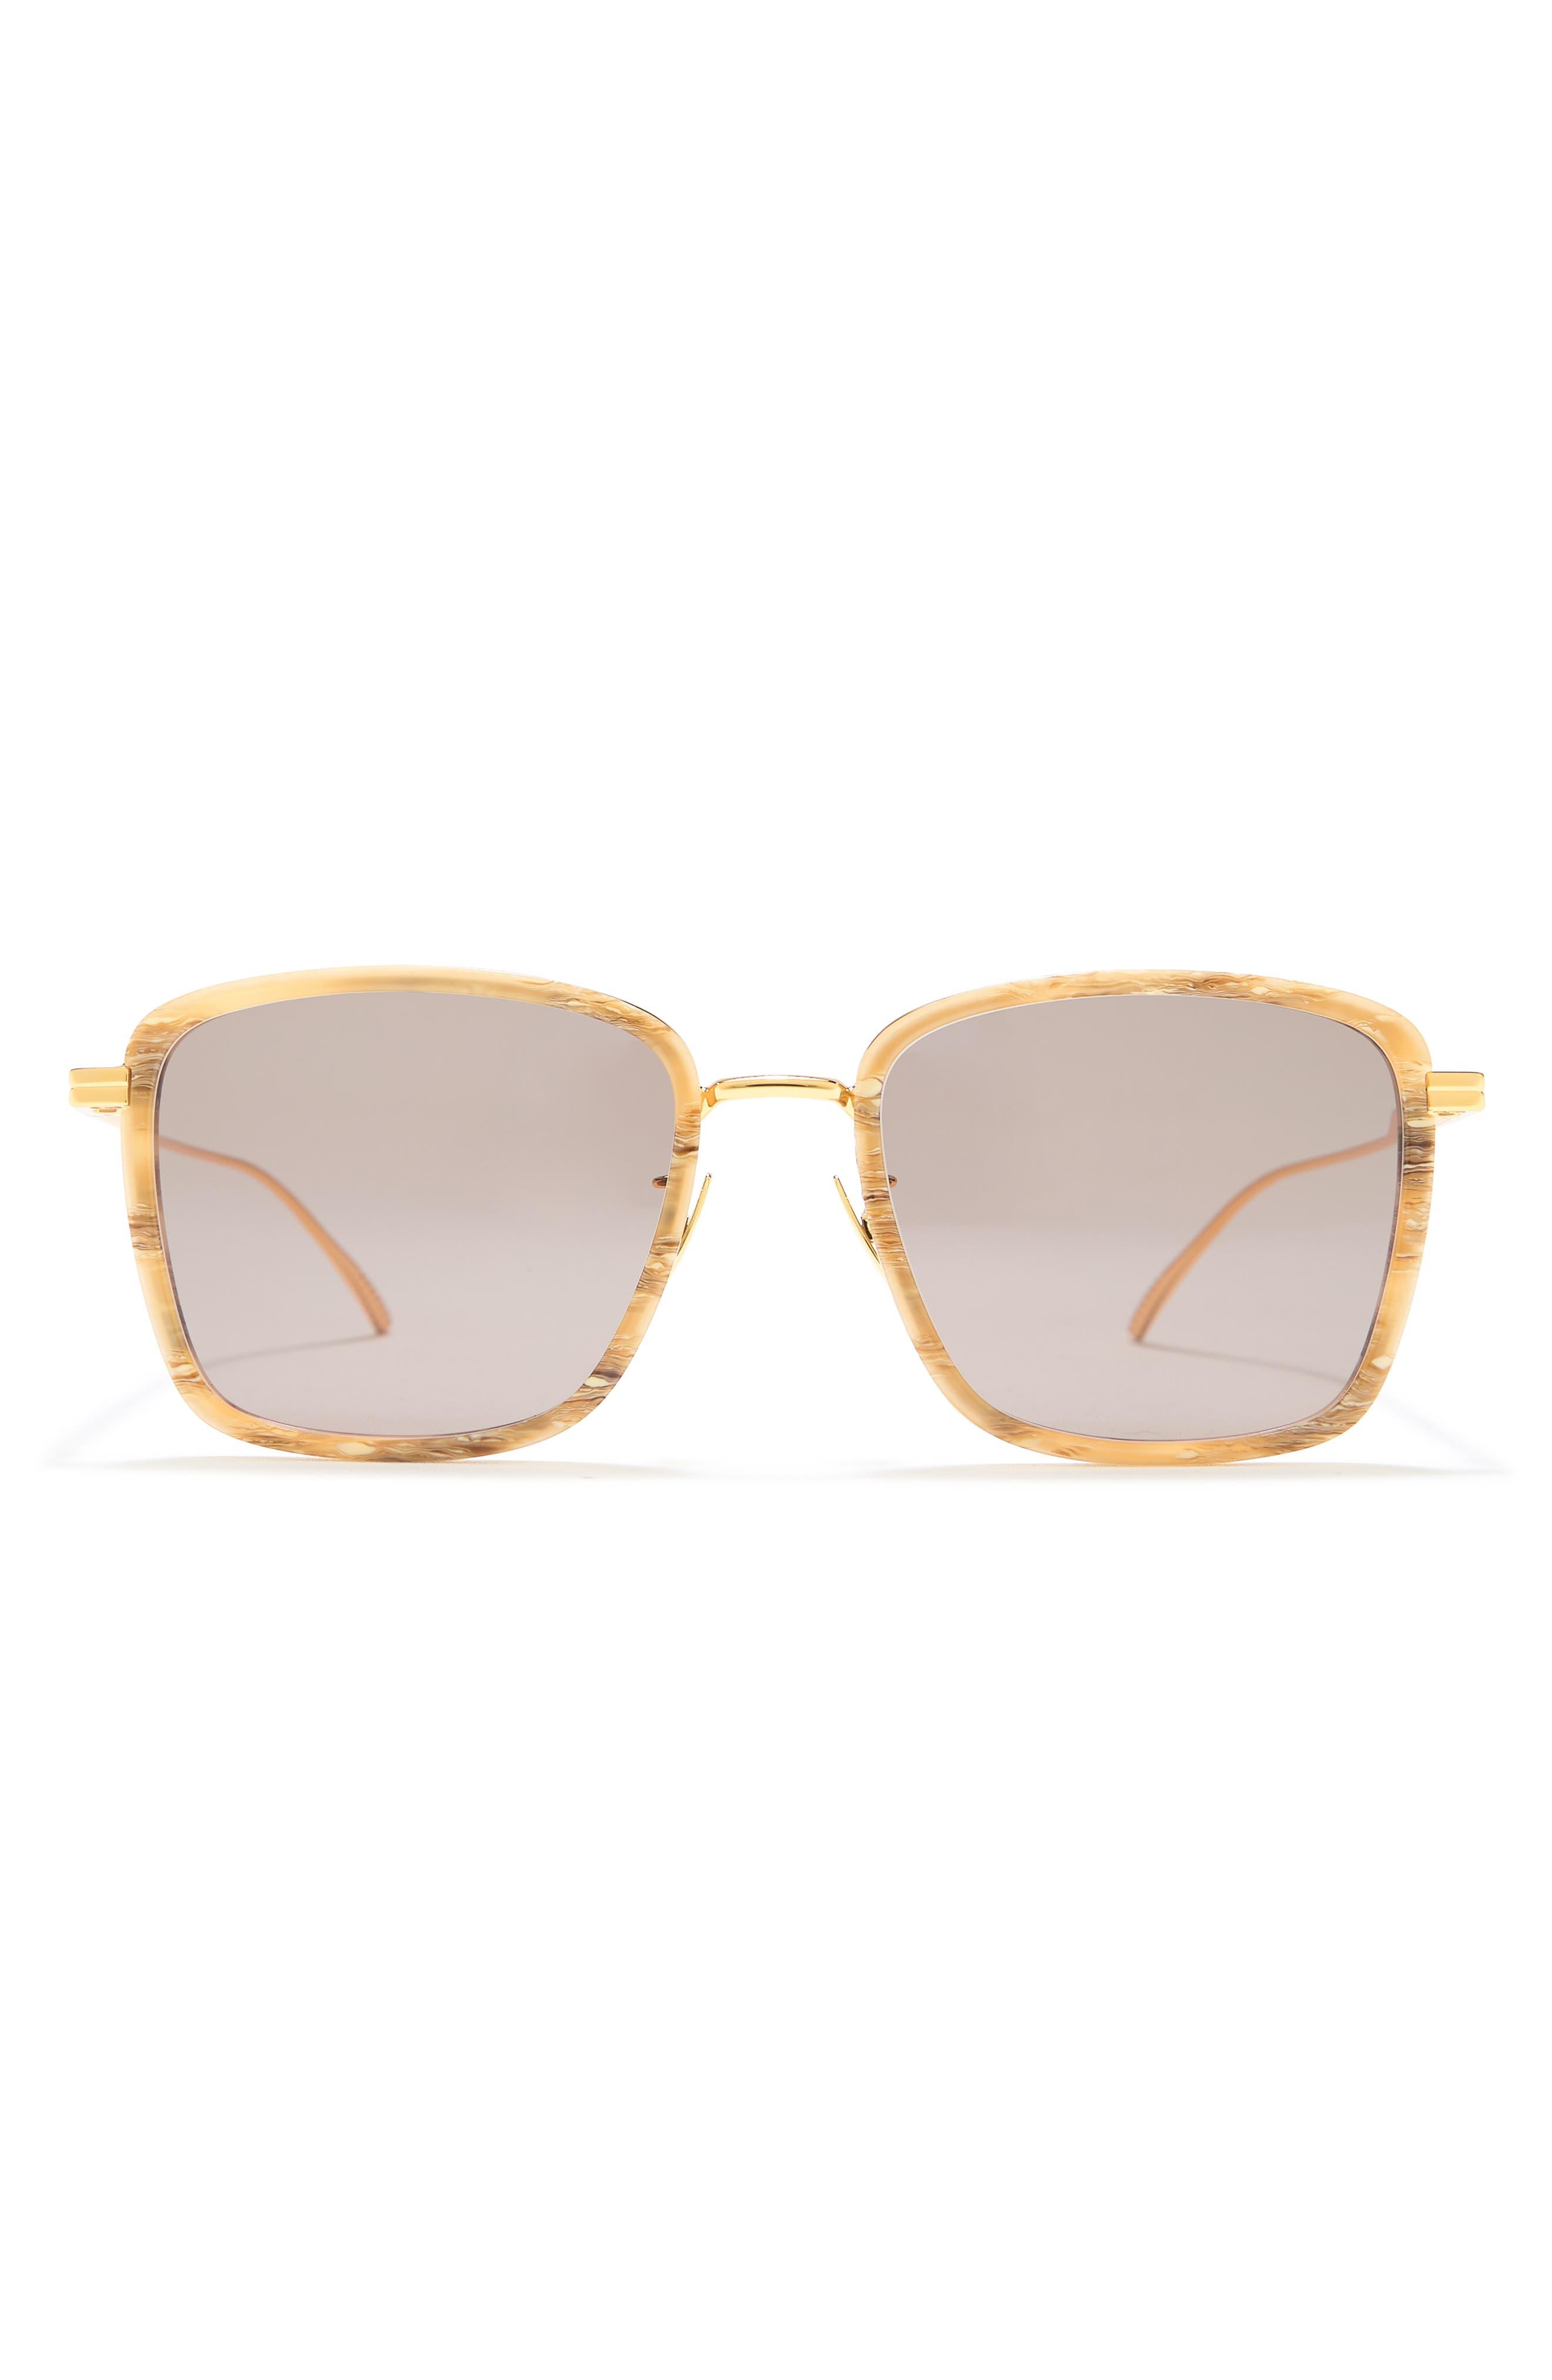 Bottega Veneta 55mm Square Rectangle Sunglasses In Beige Gold